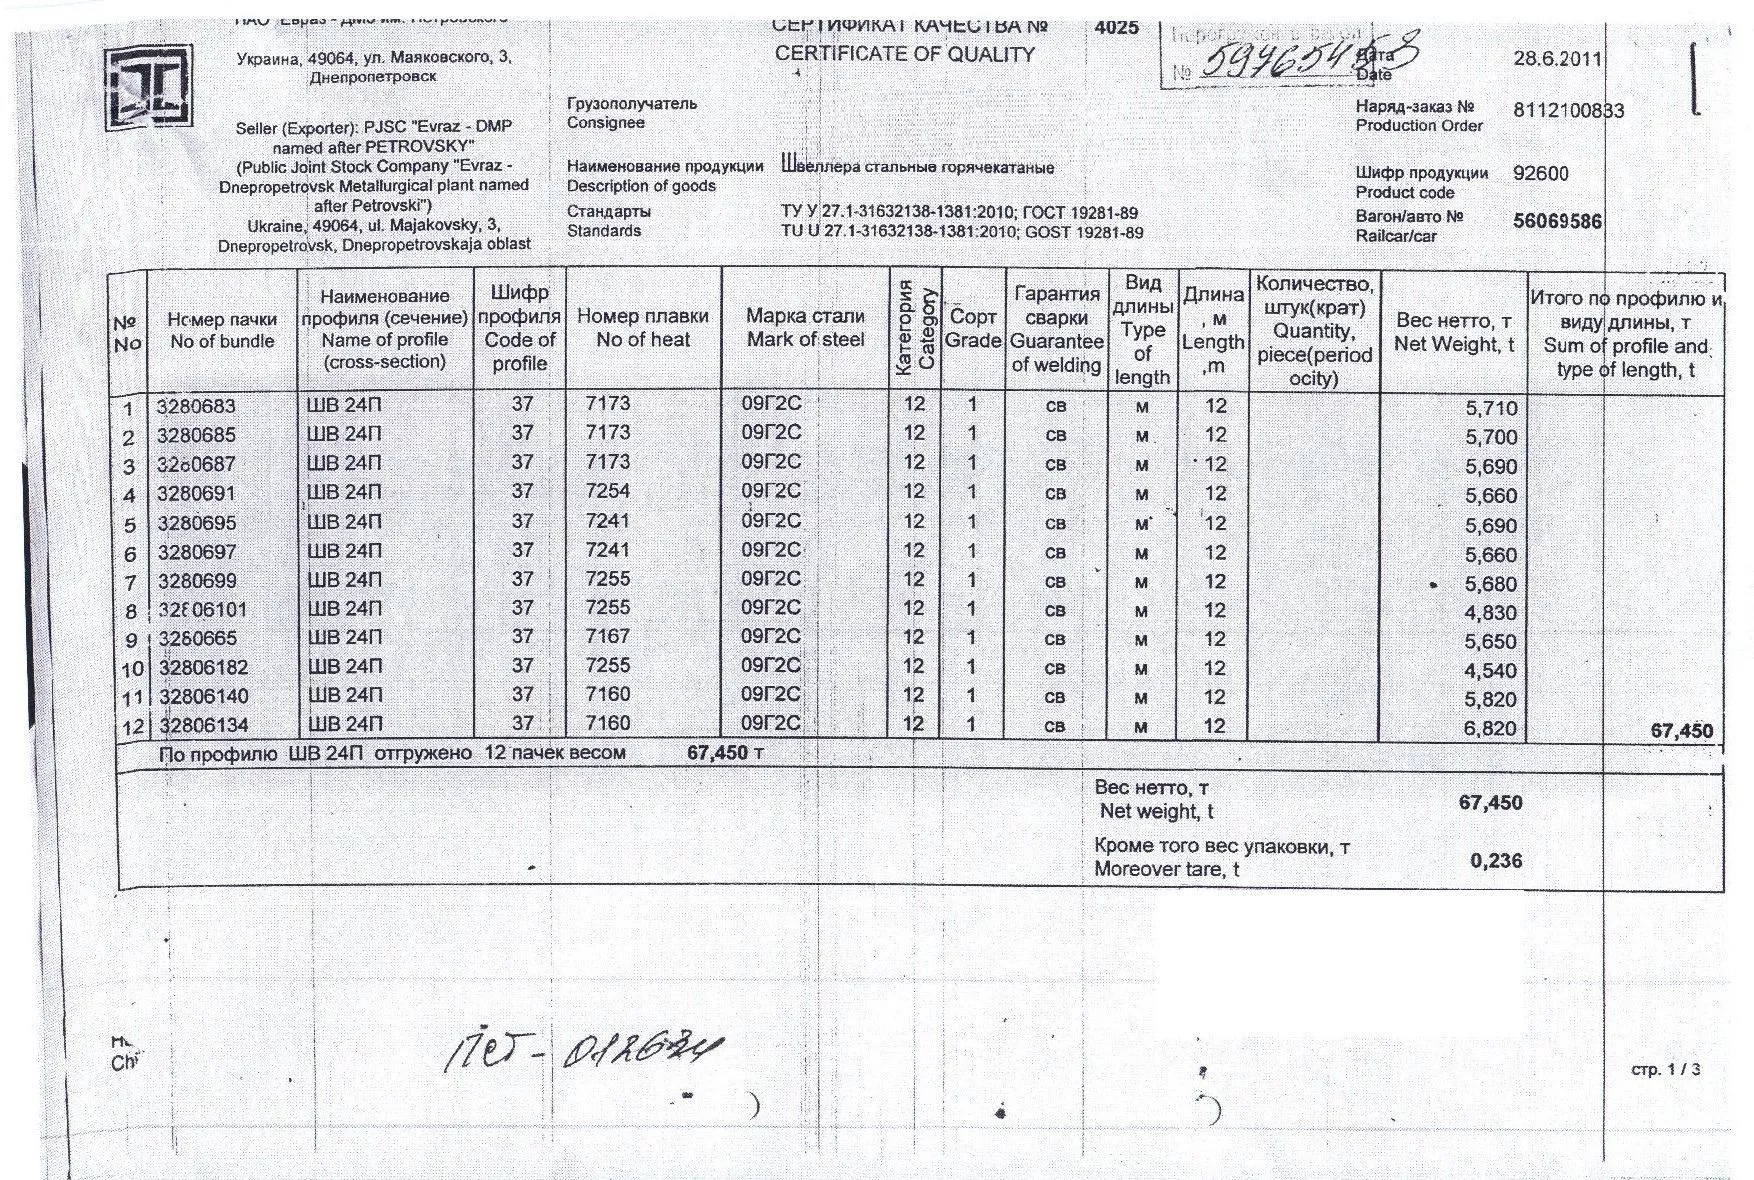 Сертификат на швеллер из стали 09Г2С 24П (1.1)